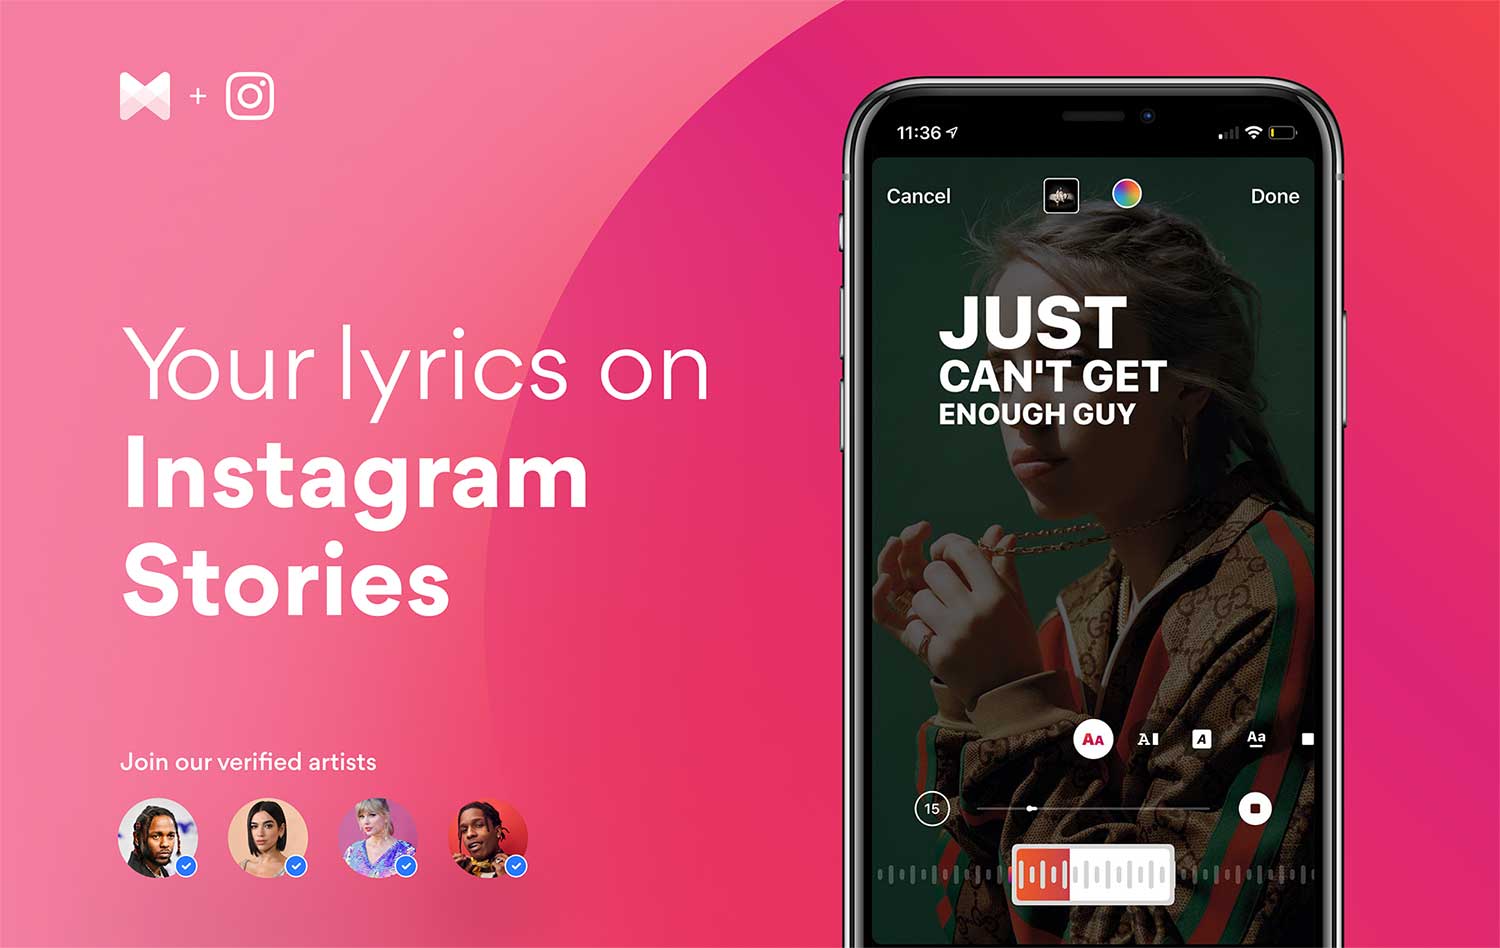 Cara Menambahkan Lirik Lagu Di Musik. Cara menambahkan lirik lagu ke Instagram Story